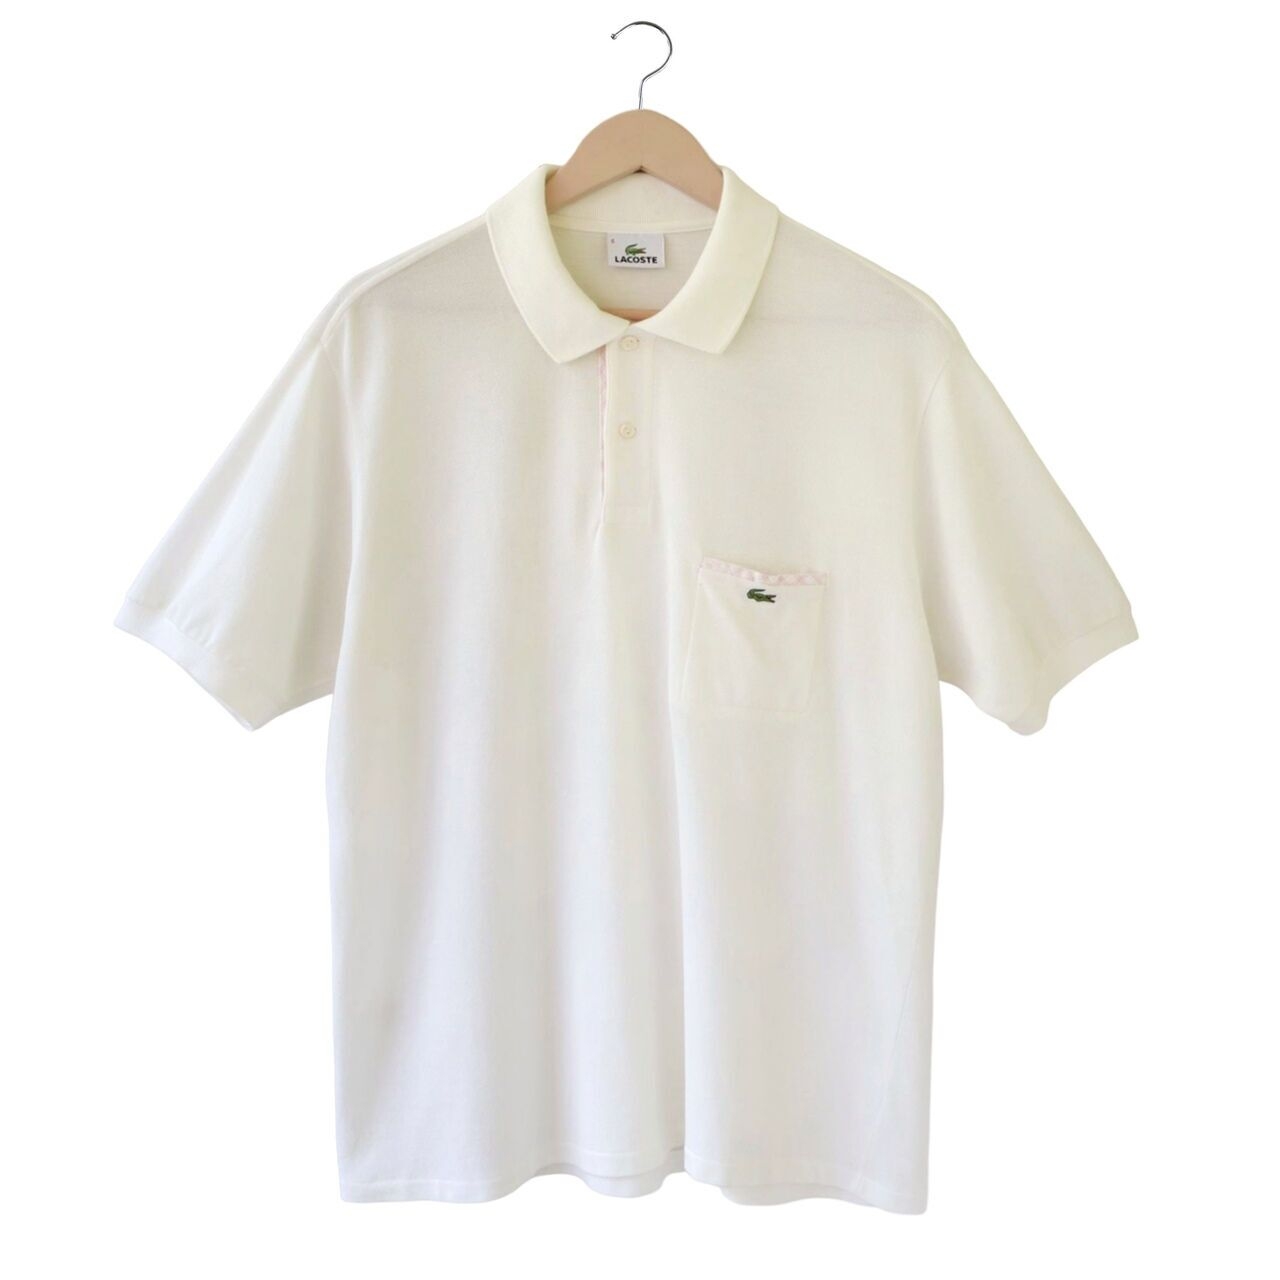 Lacoste White Polo Shirt